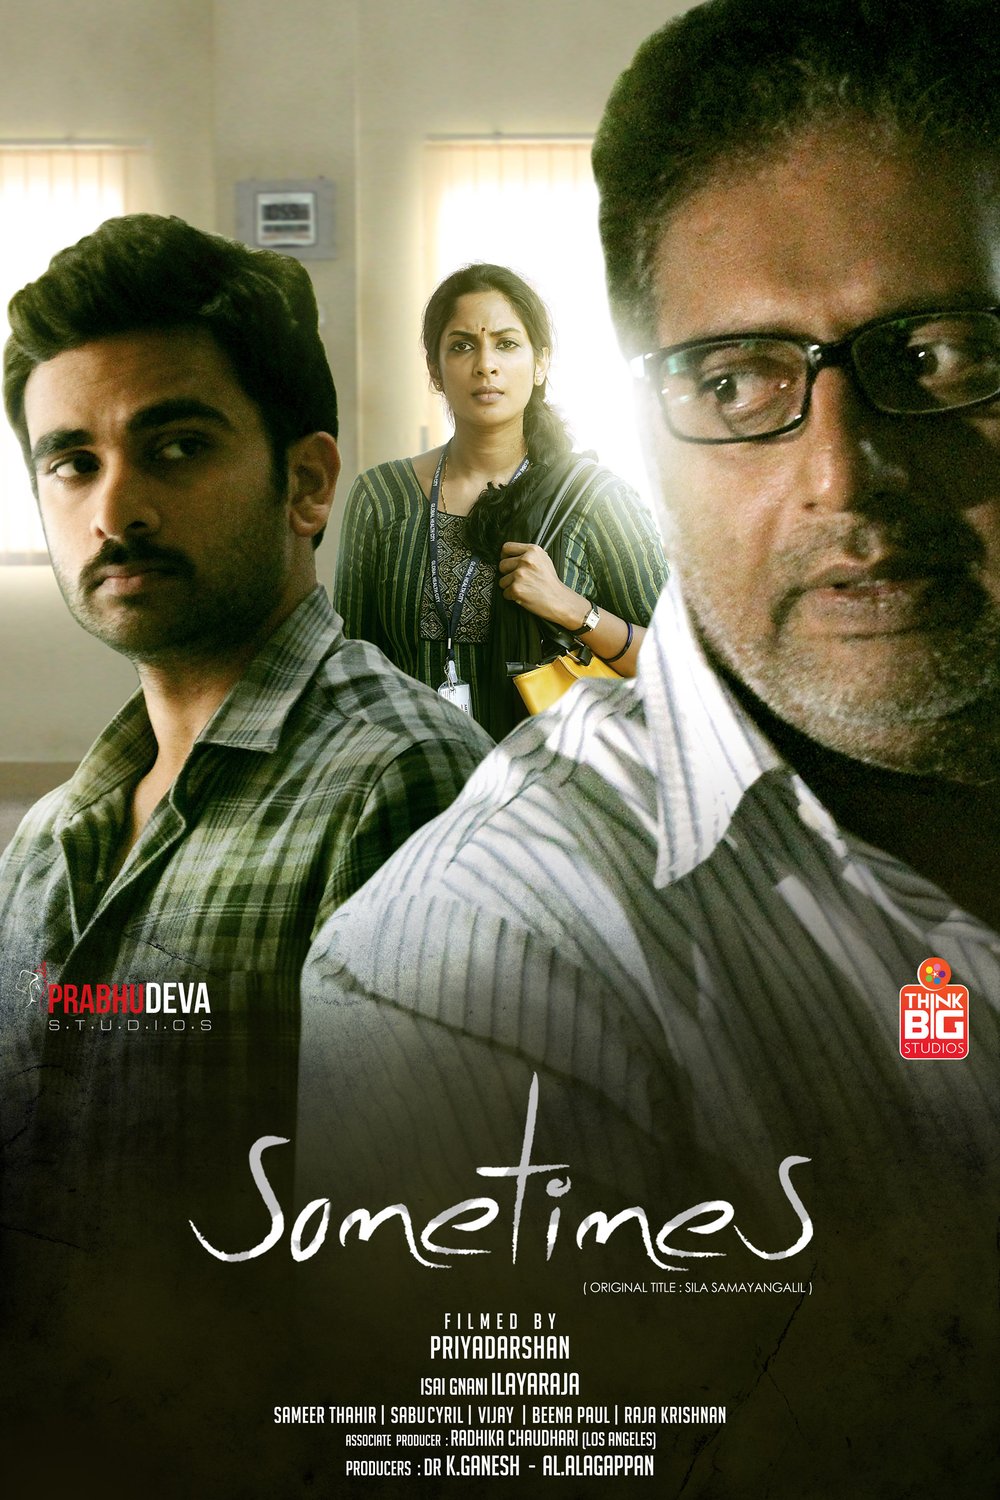 Tamil poster of the movie Sila Samayangalil